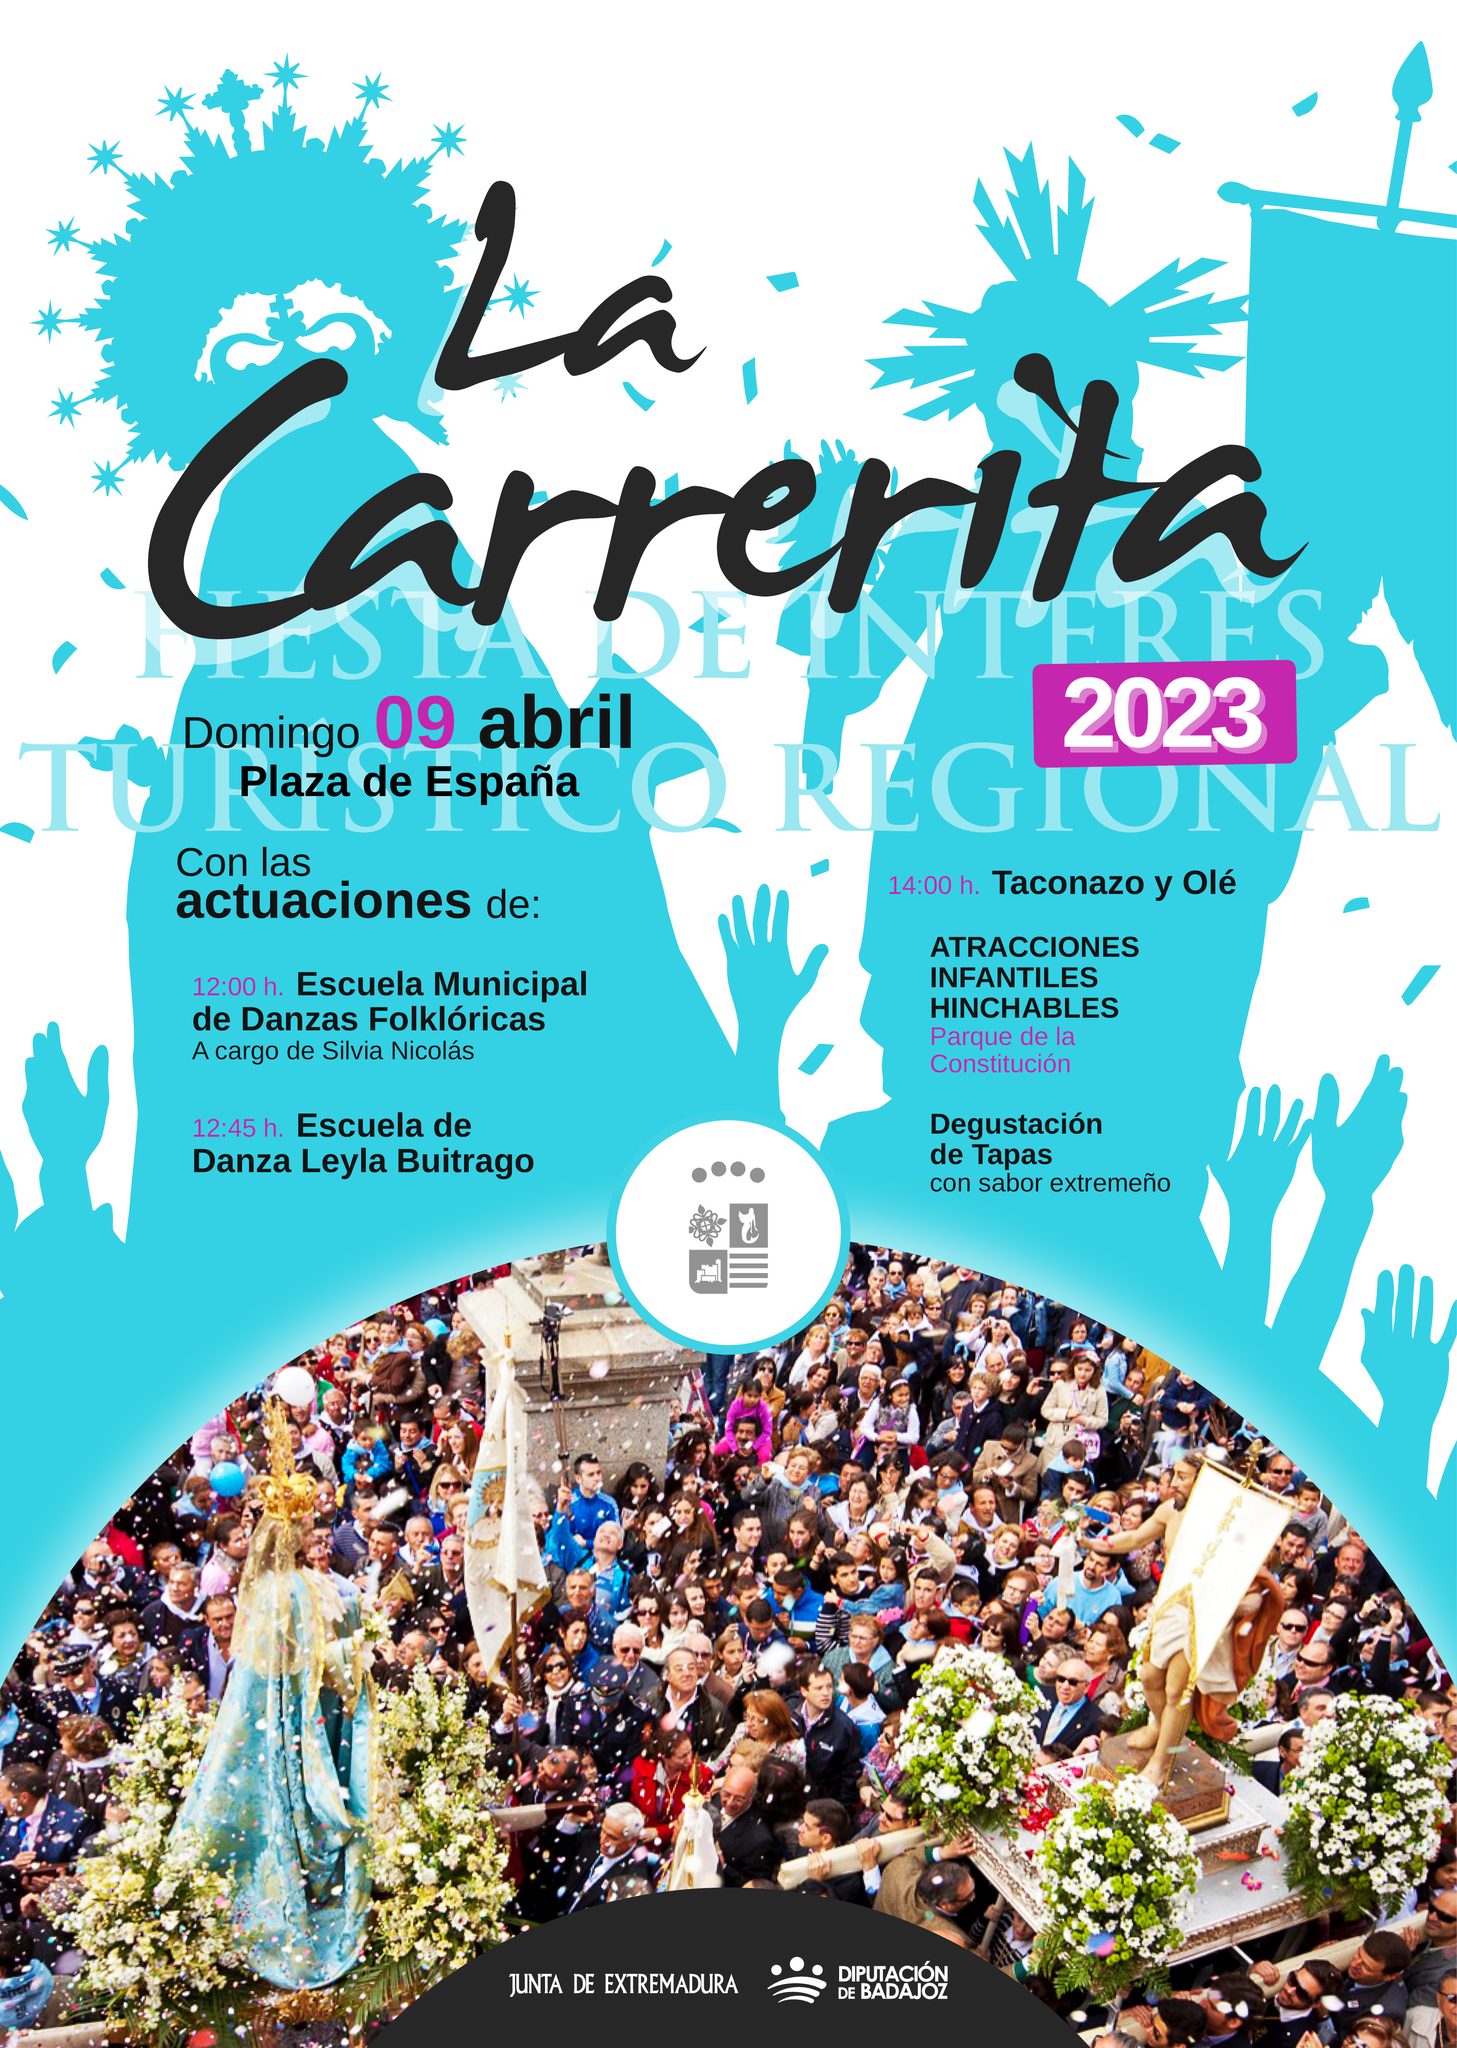 La Carrerita. Fiesta de Interés Turístico Regional.